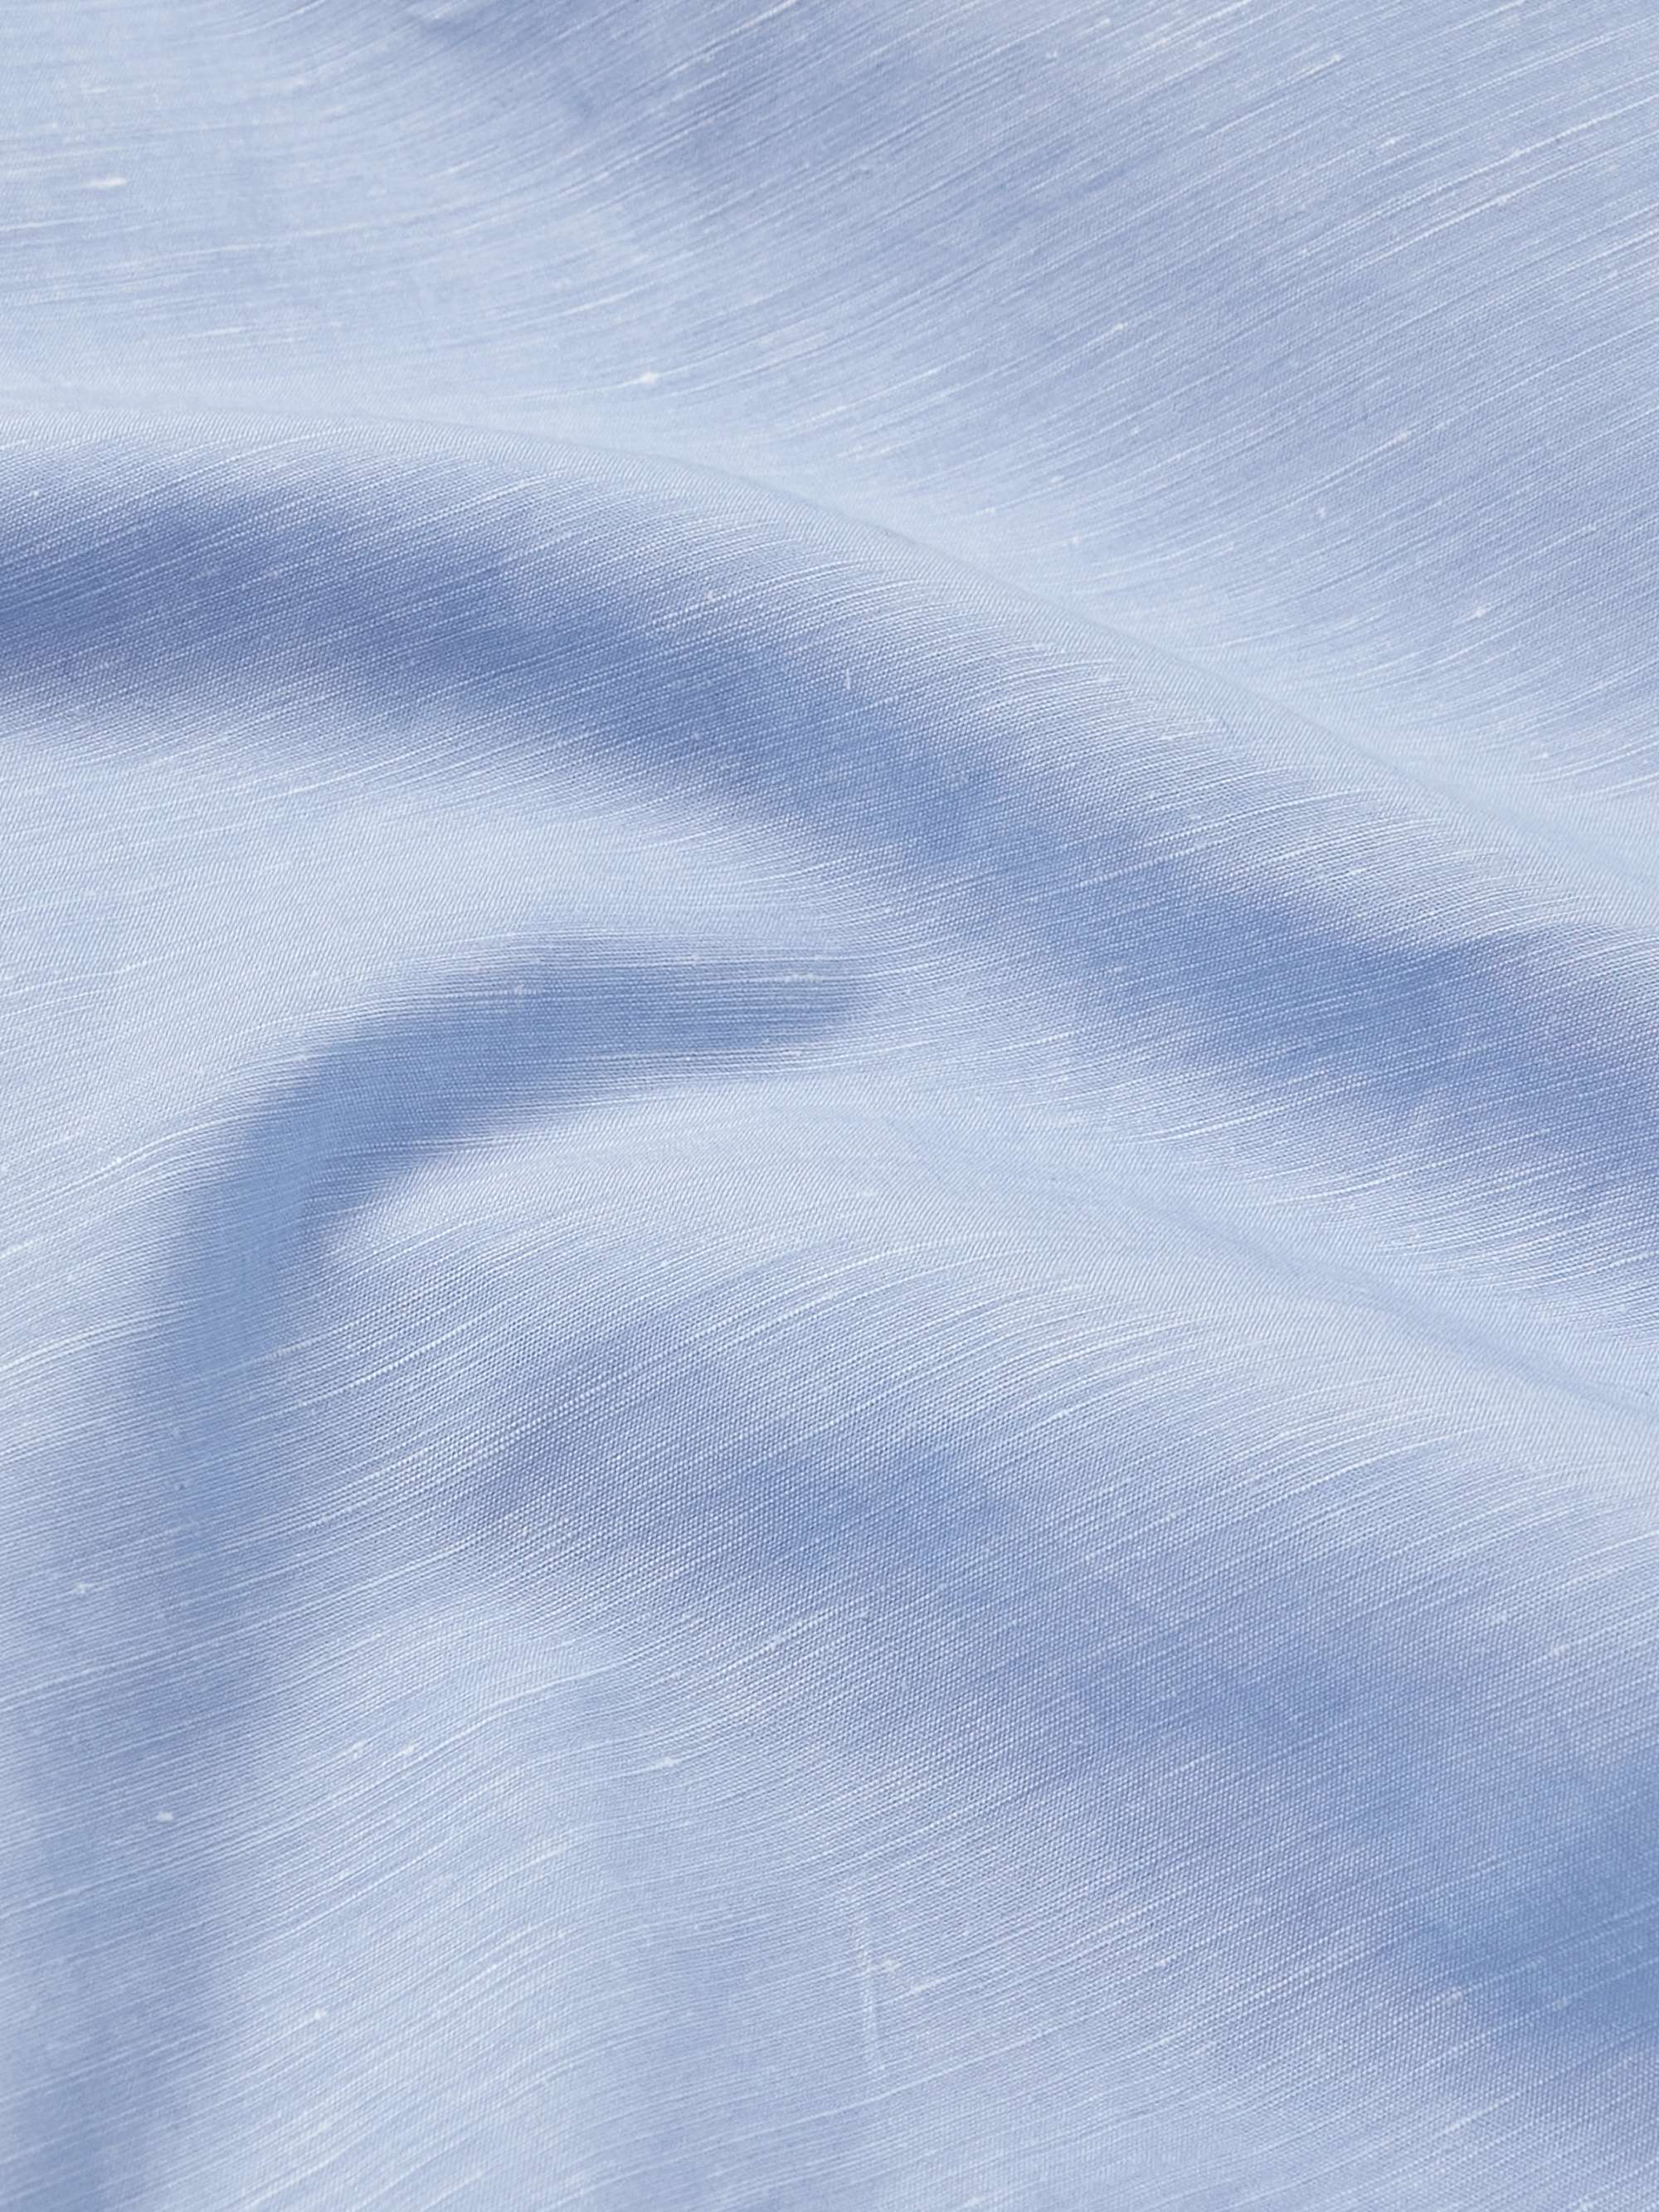 LORO PIANA Linen and Cotton-Blend Shirt